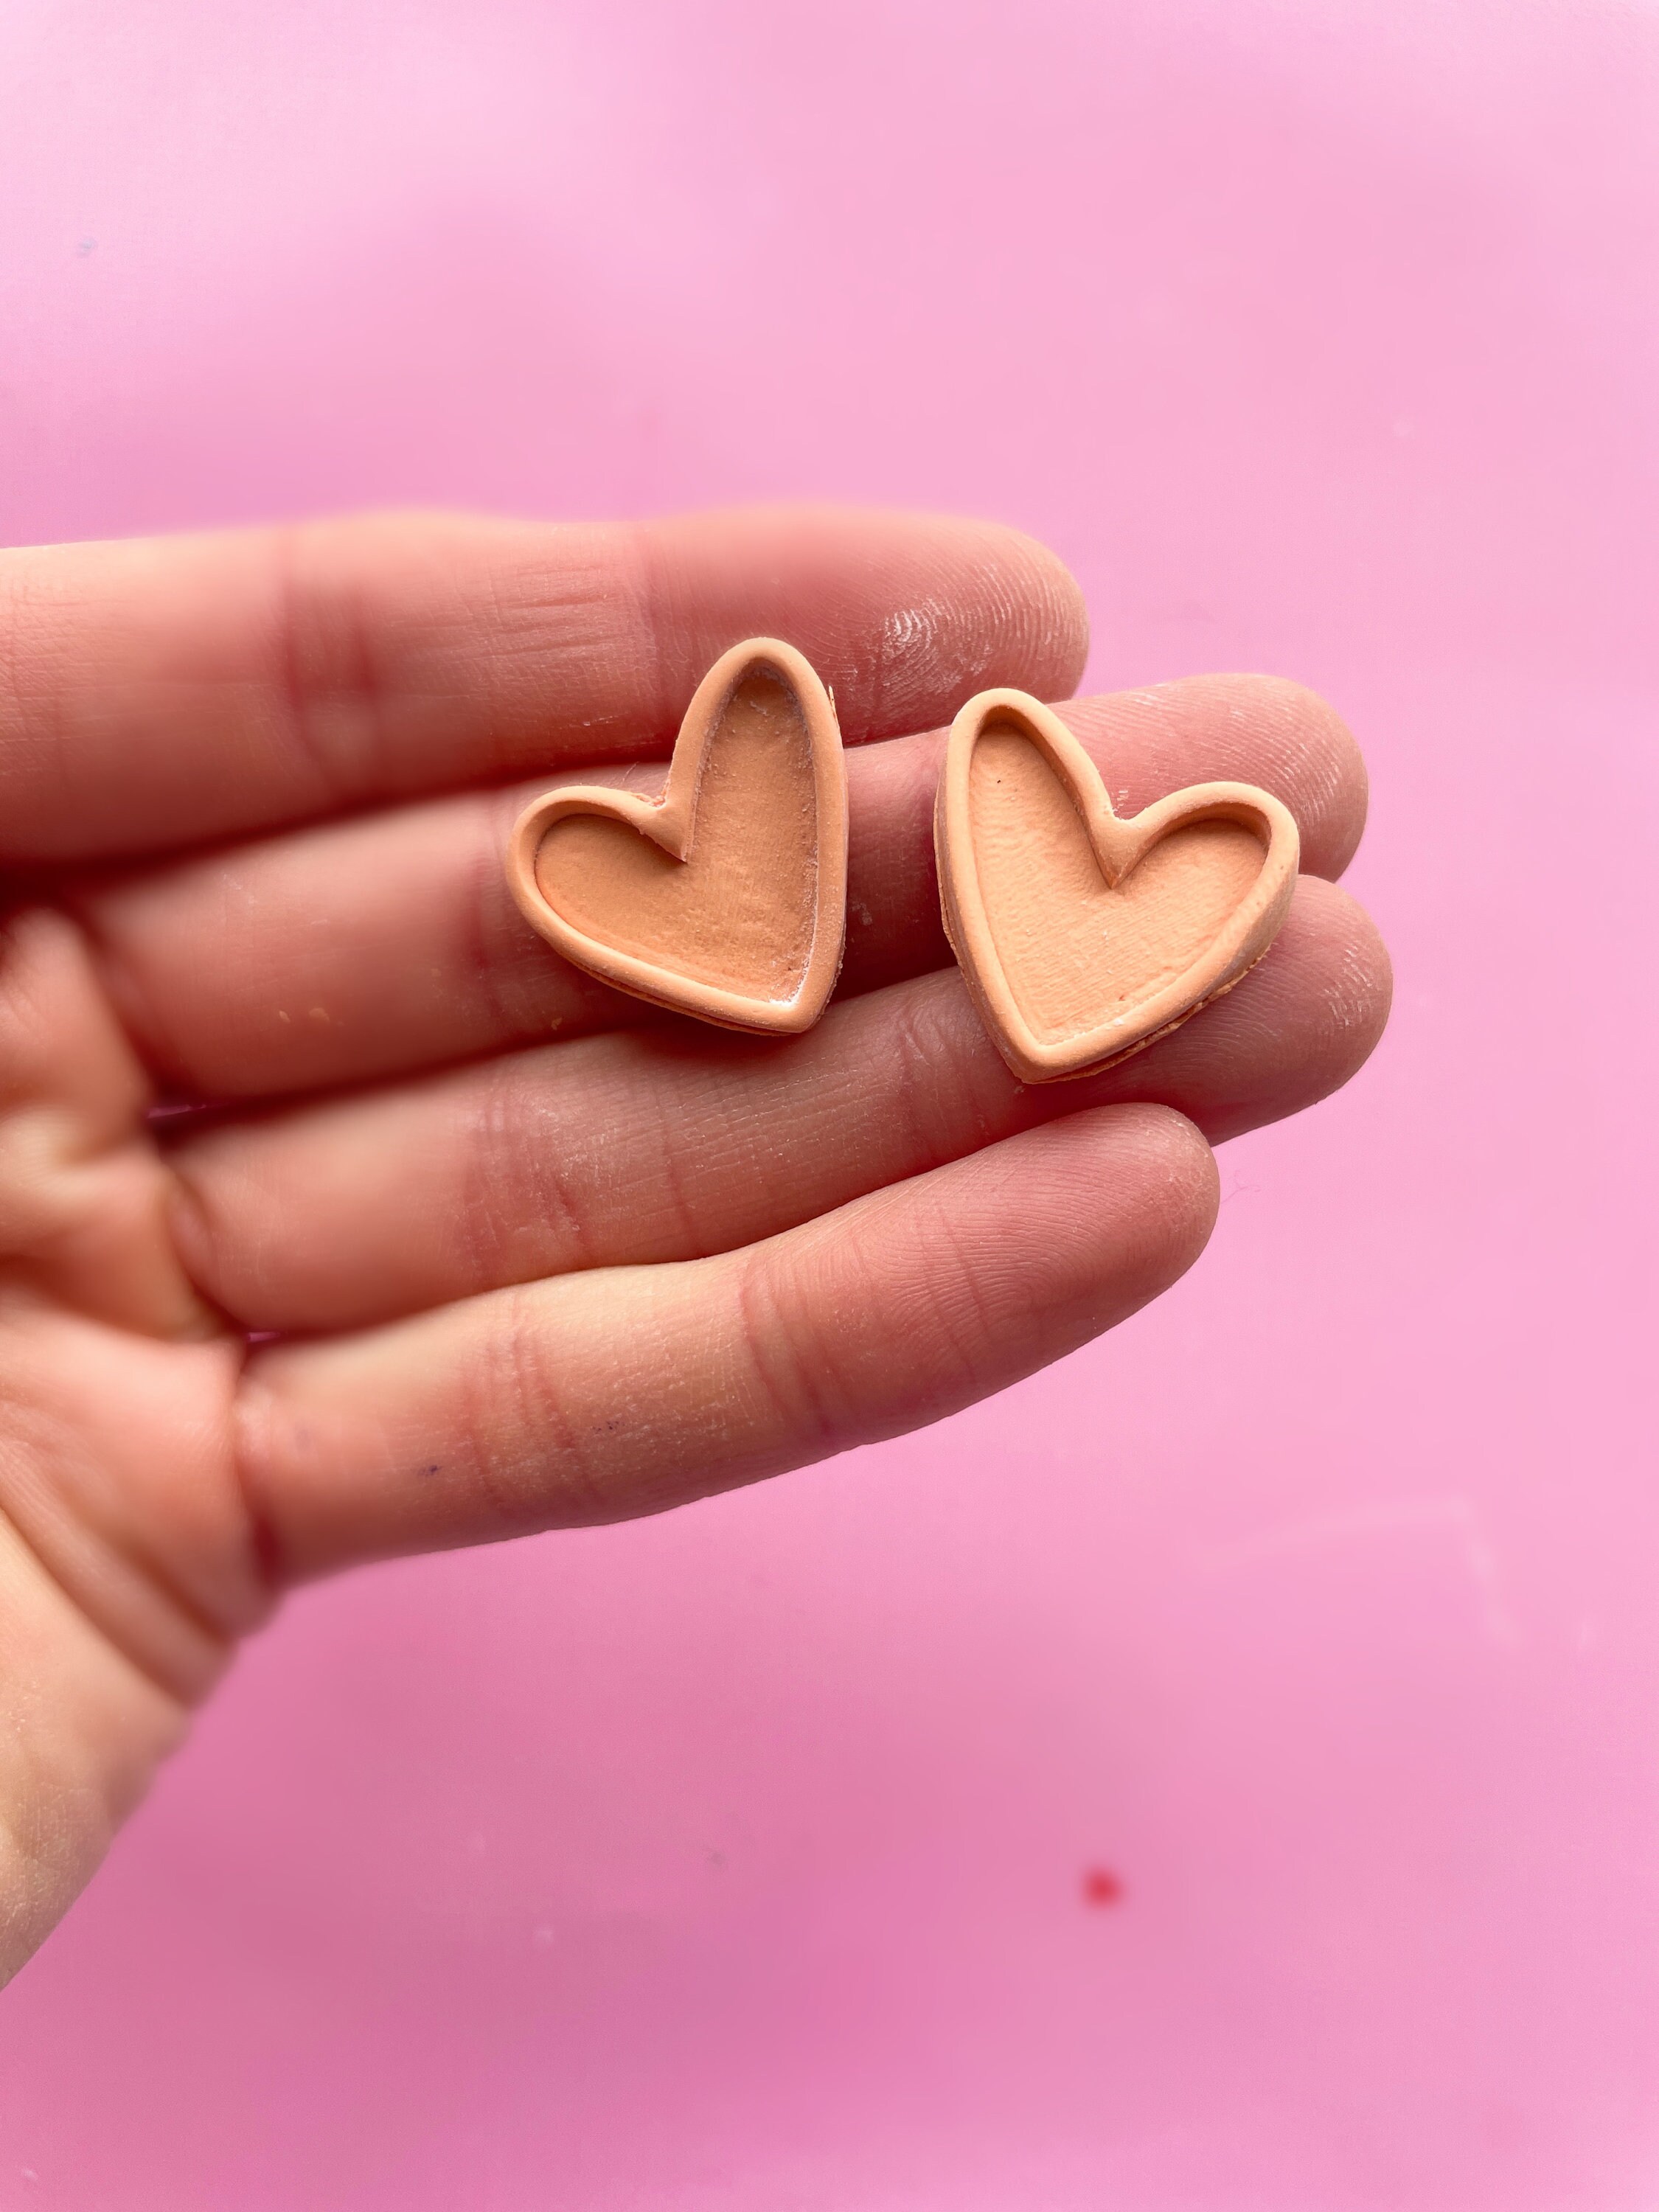 Love Heart Clay Cutter Debossing. Heart Shape Cutter for Polymer